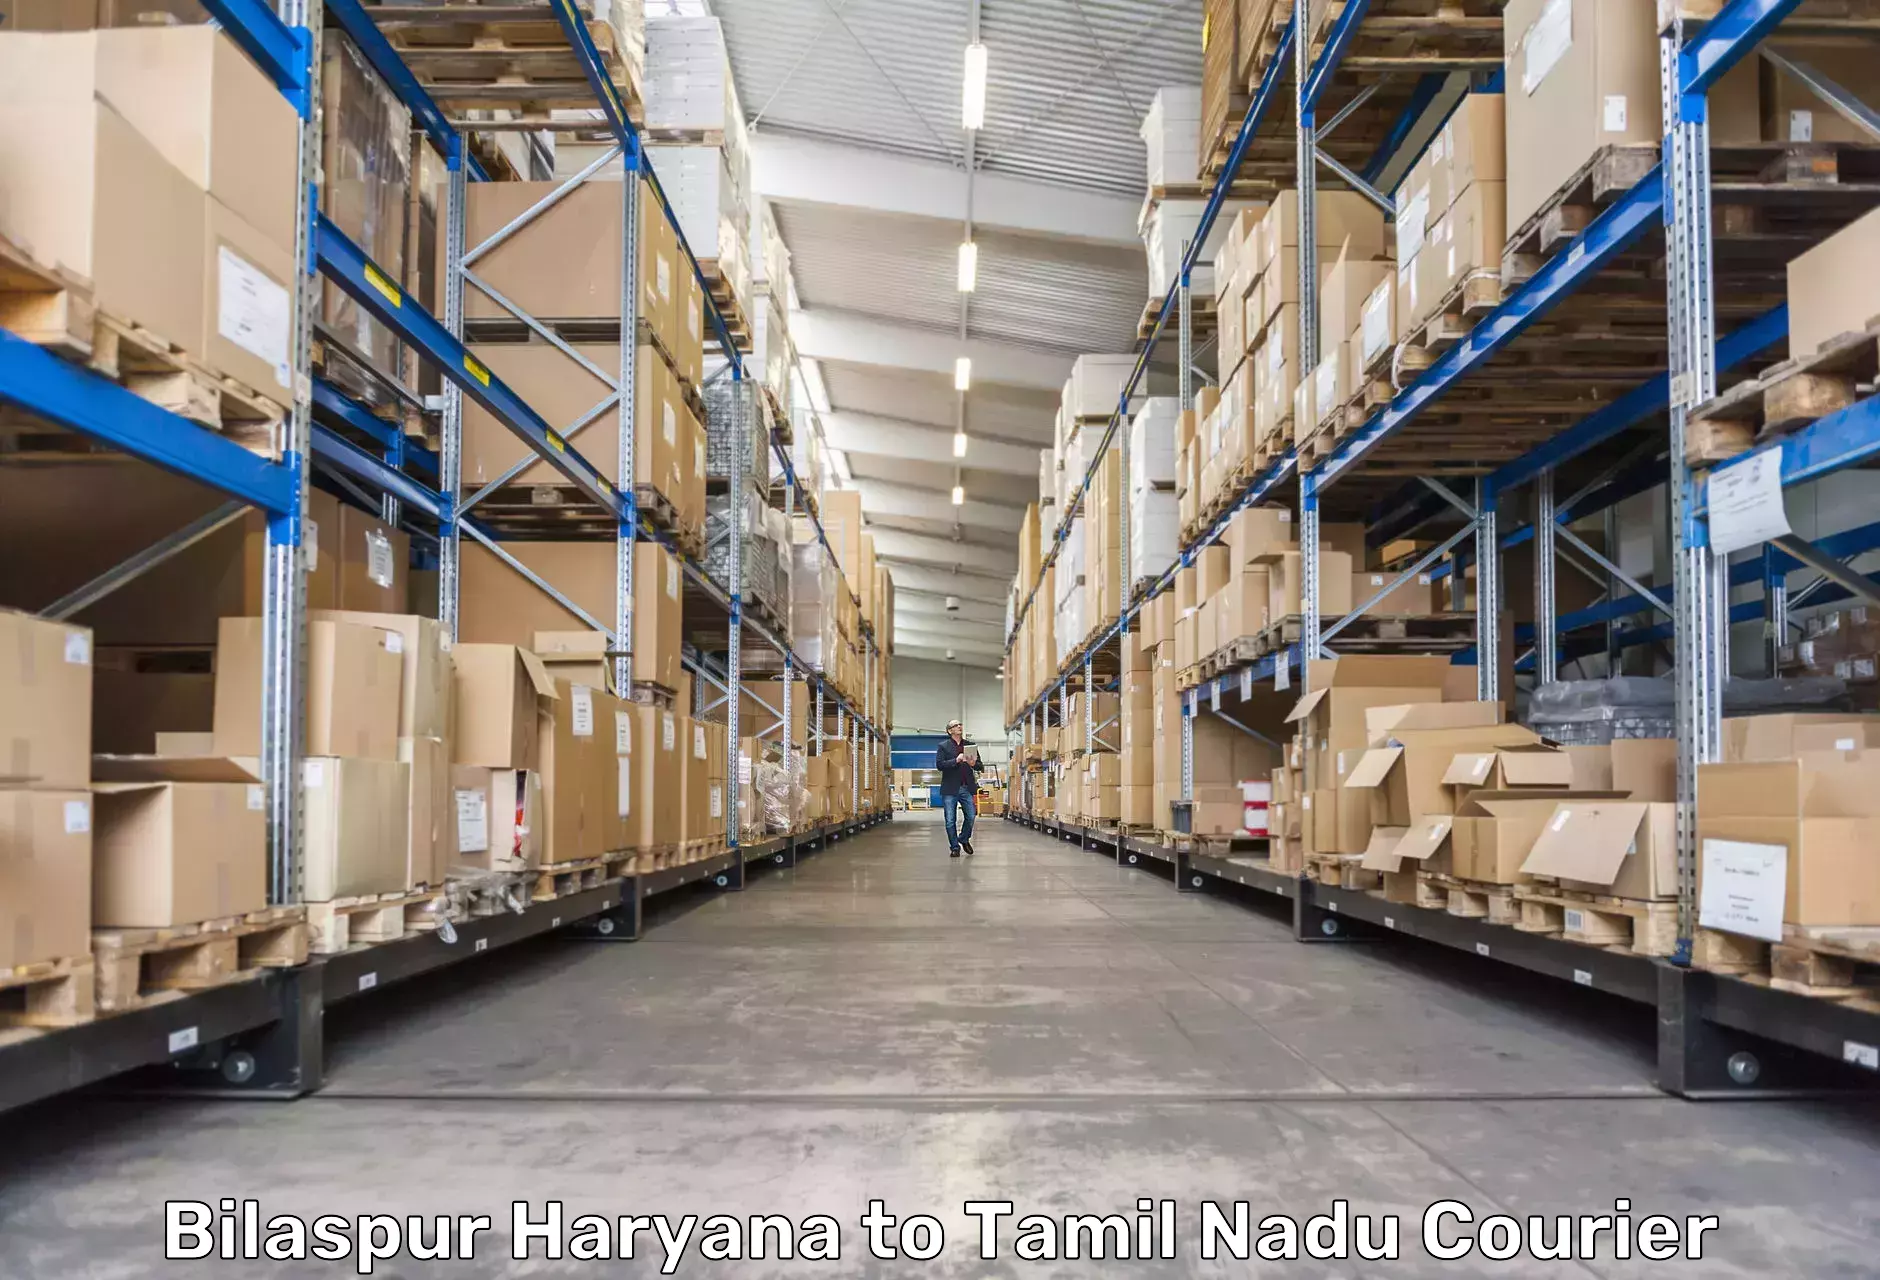 Delivery service partnership Bilaspur Haryana to Tamil Nadu